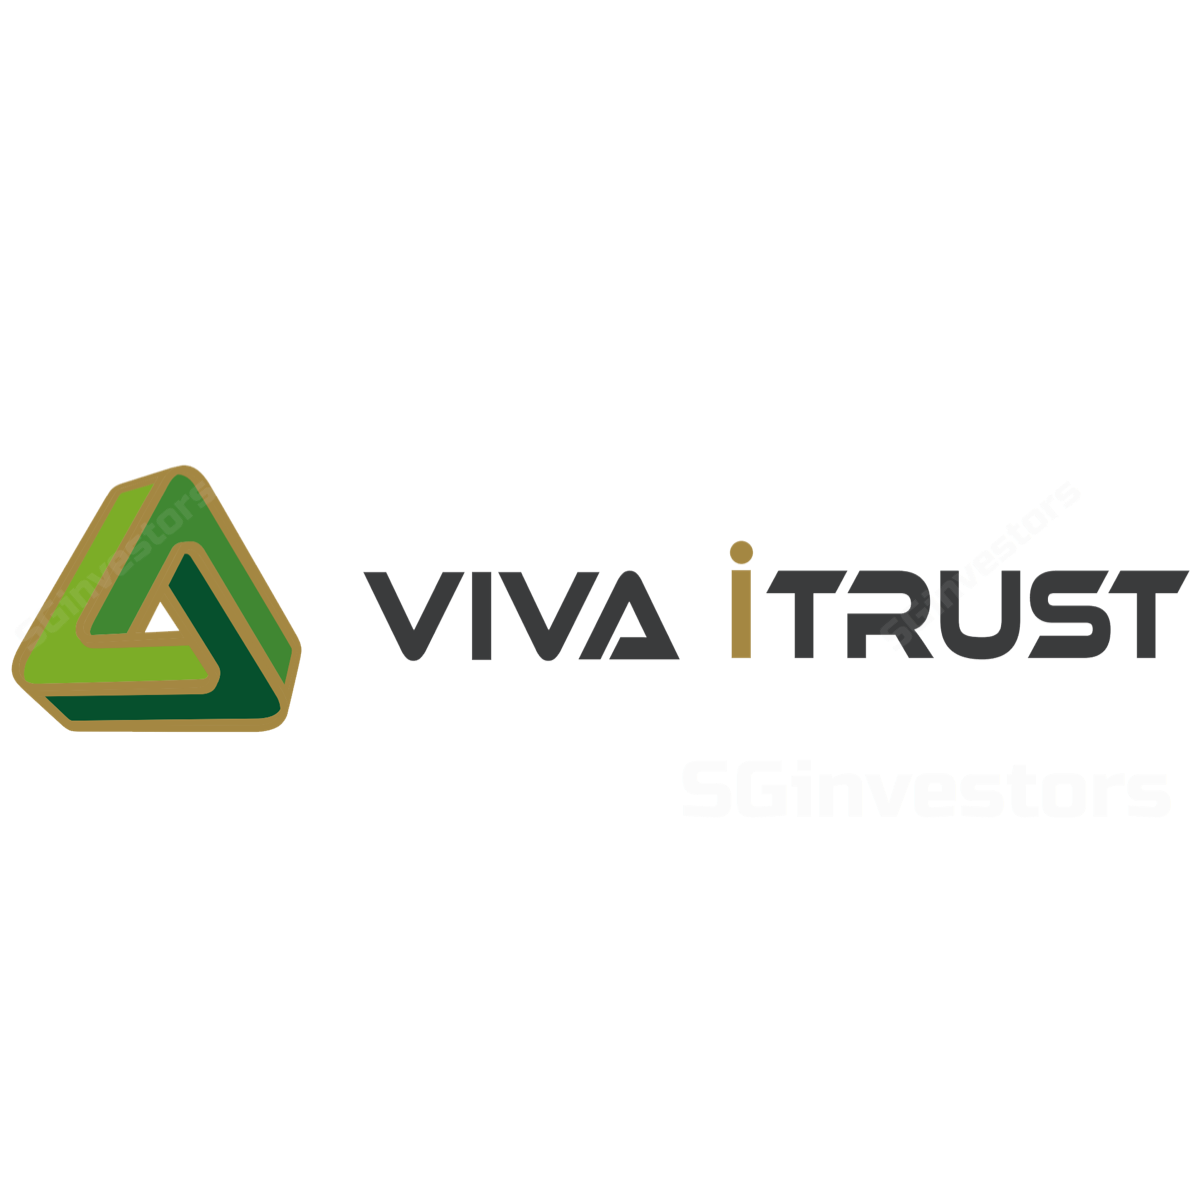 Viva Industrial Trust - RHB Invest 2017-04-25: Minimal Impact From Jackson international Liquidation Notice